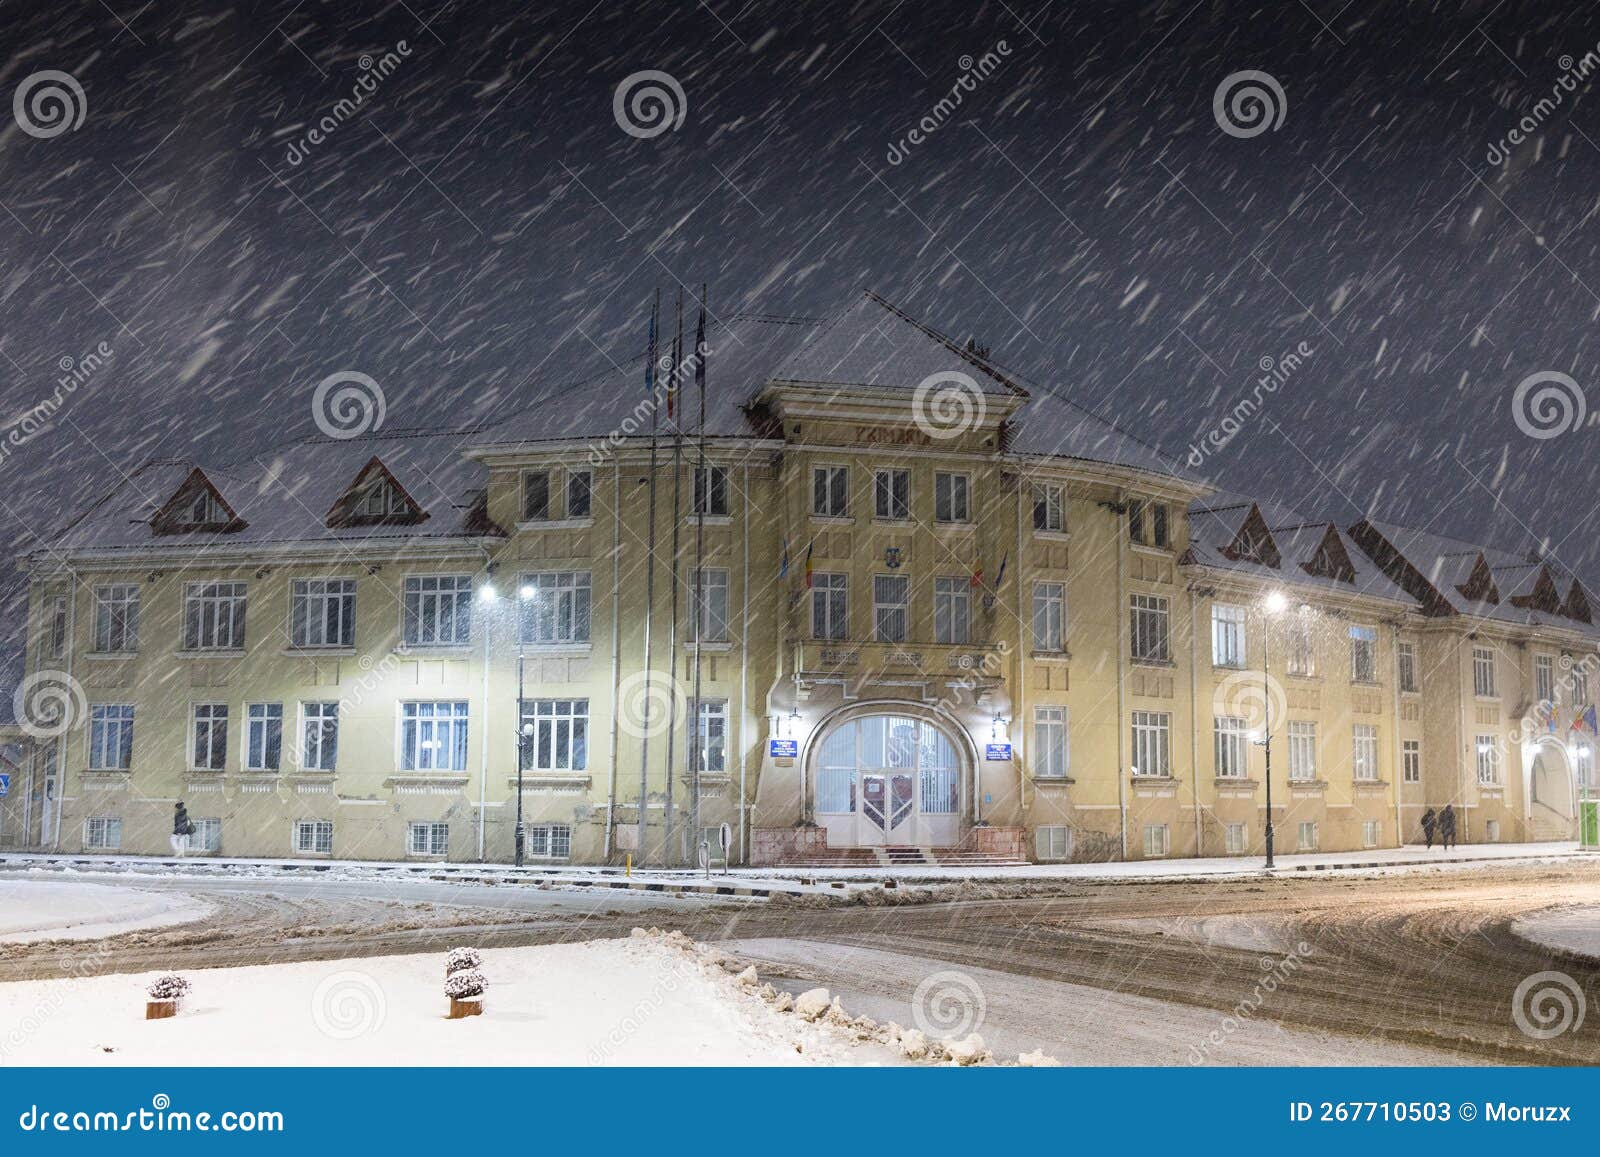 giurgiu city hall at winter, night scene.